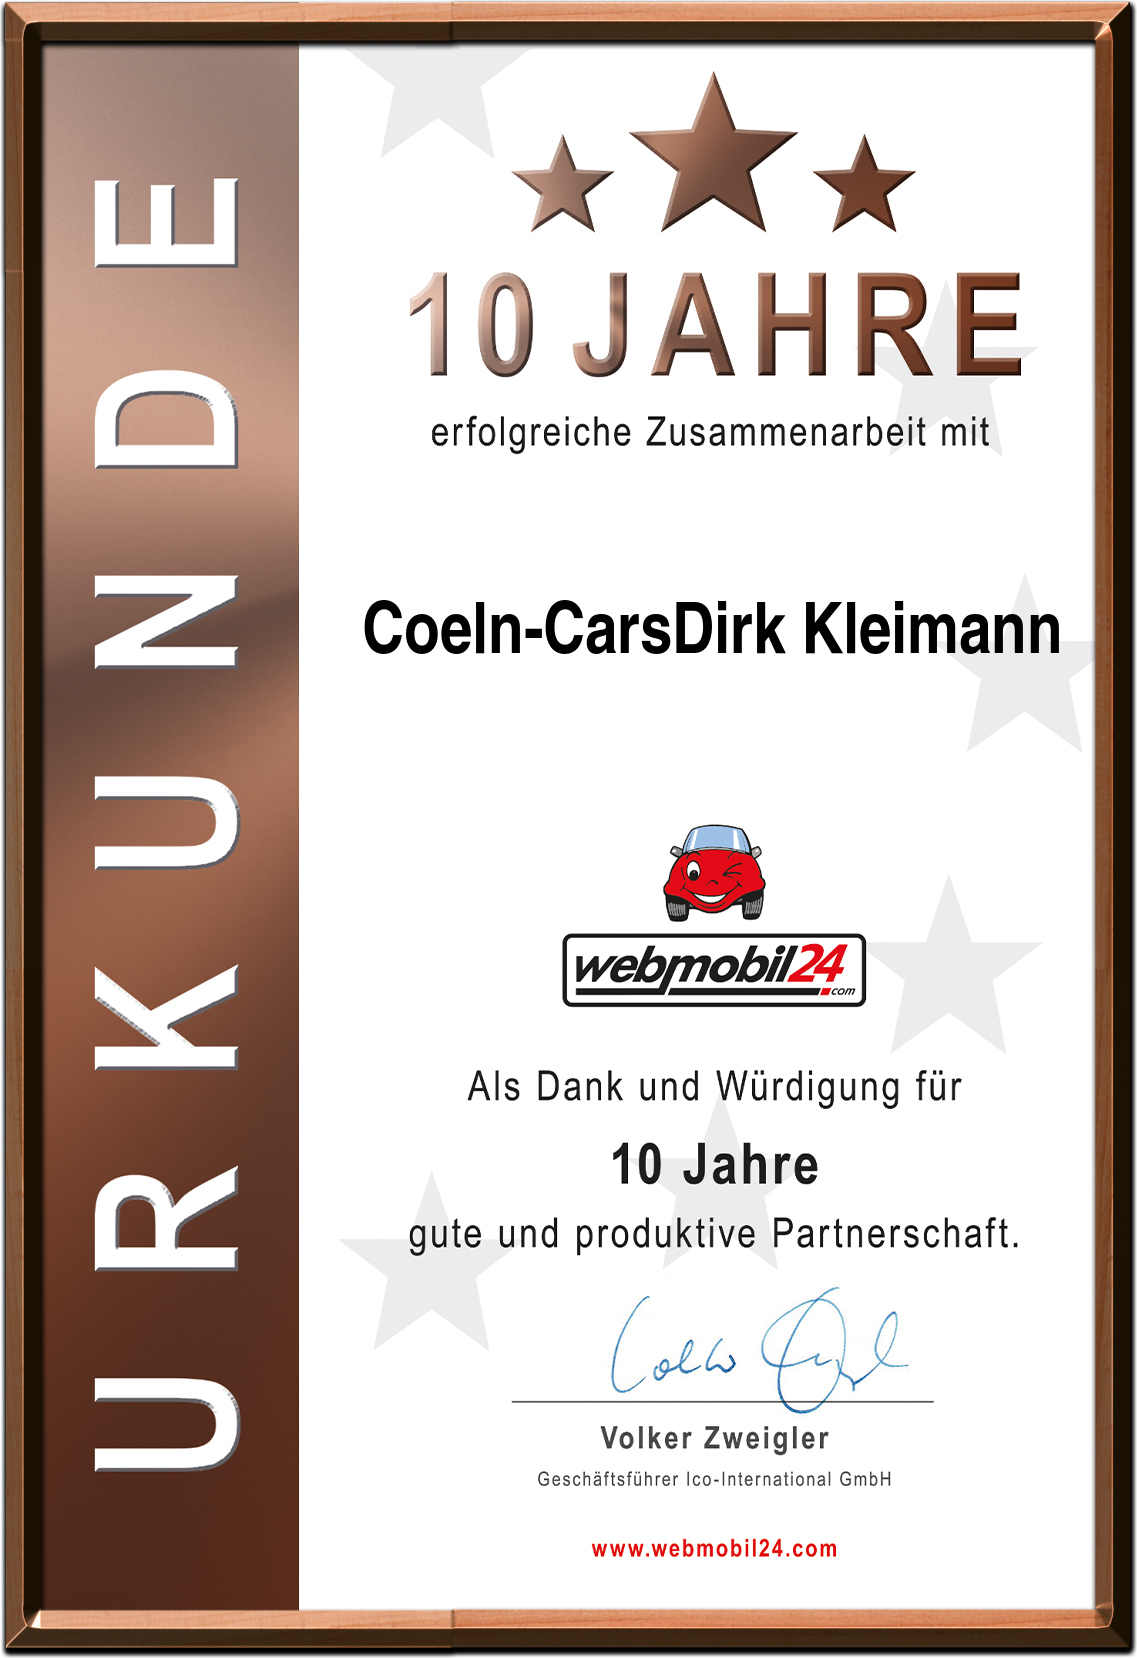 Coeln-CarsDirk Kleimann